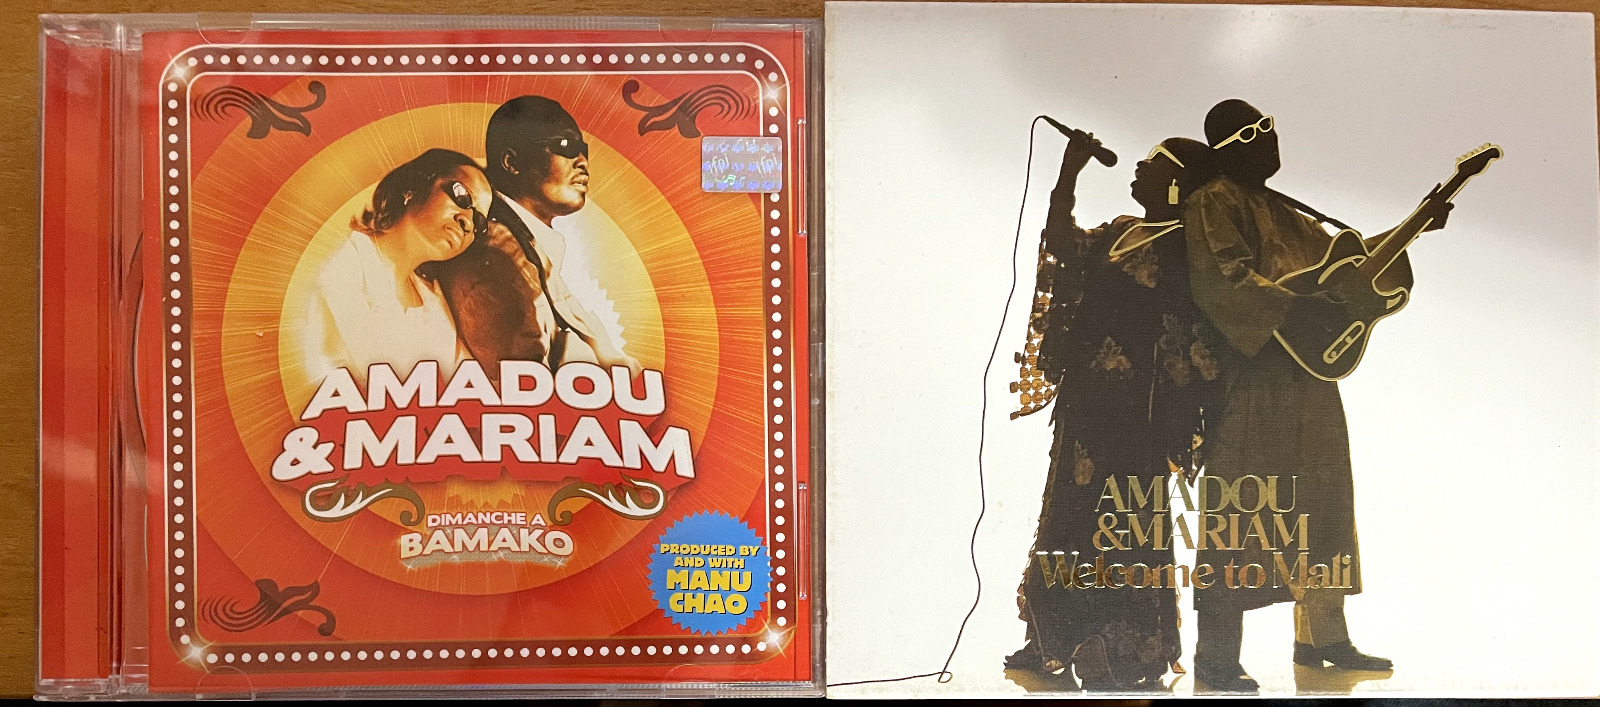 Amadou & Mariam – 2 CD LOT - Dimanche À Bamako & WELCOME TO MALI - CD'S